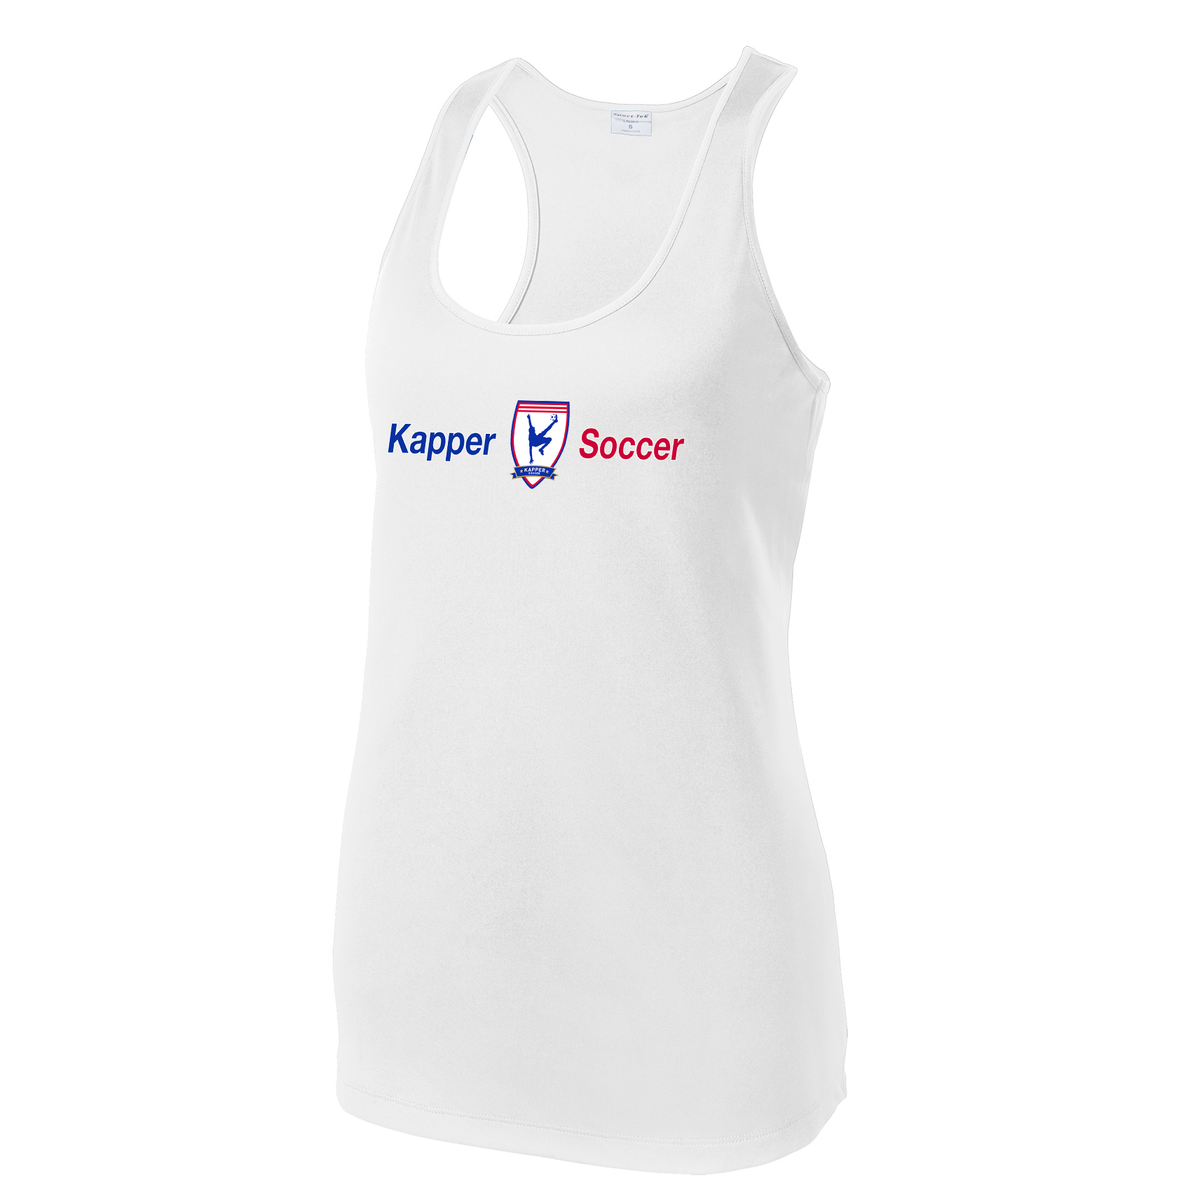 Kapper Soccer Women's Racerback Tank